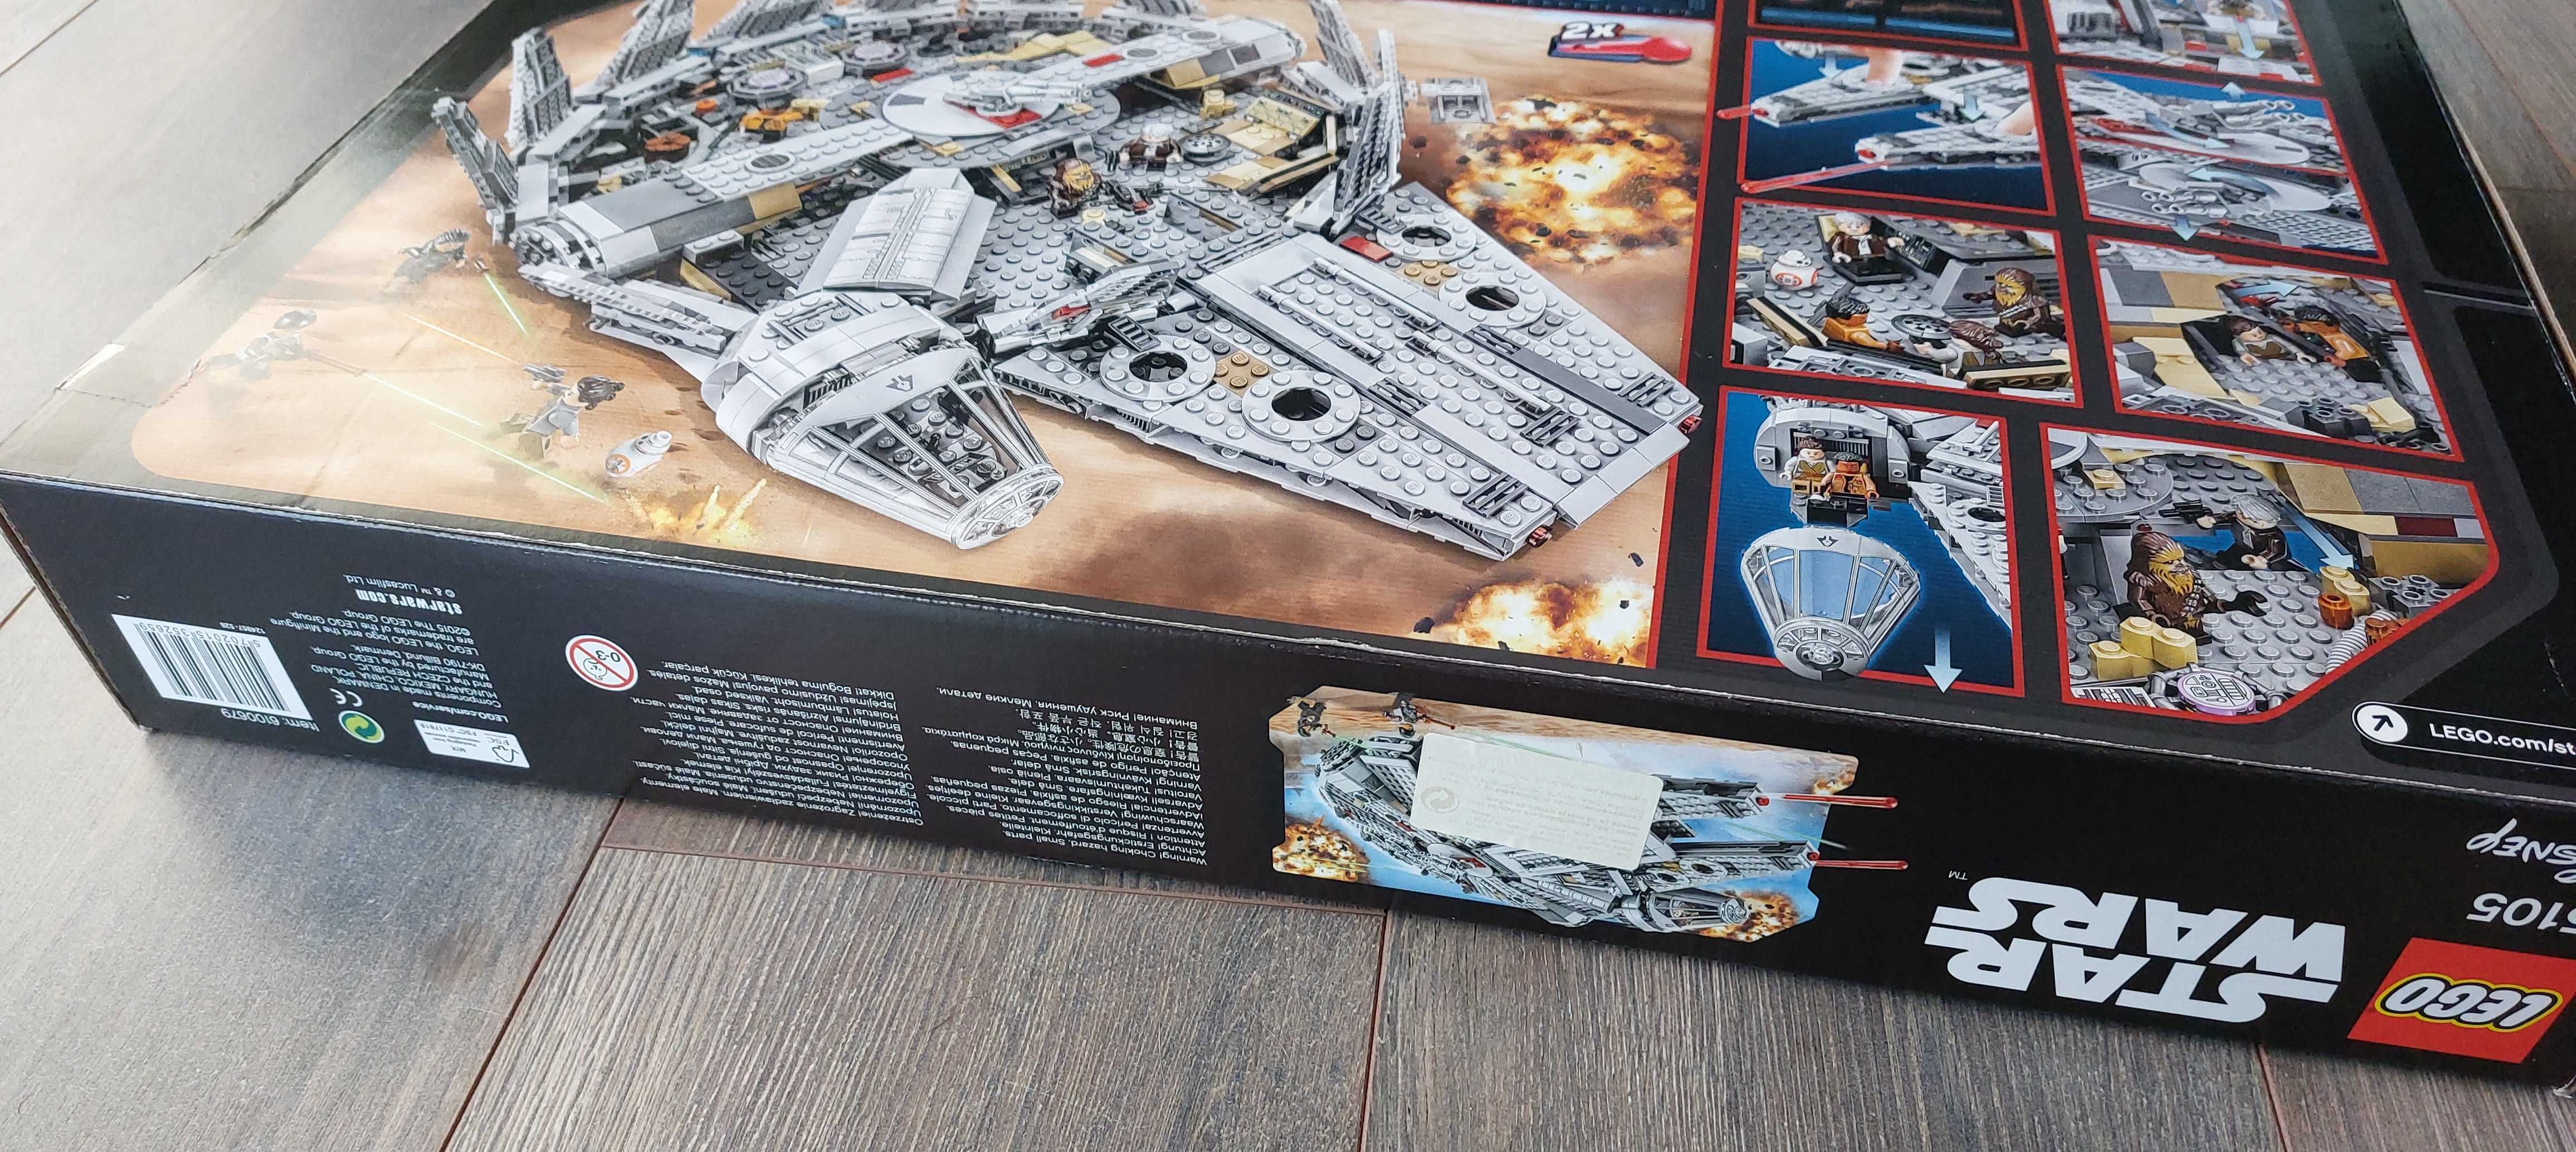 LEGO STAR WARS Millenium Falcon 75105